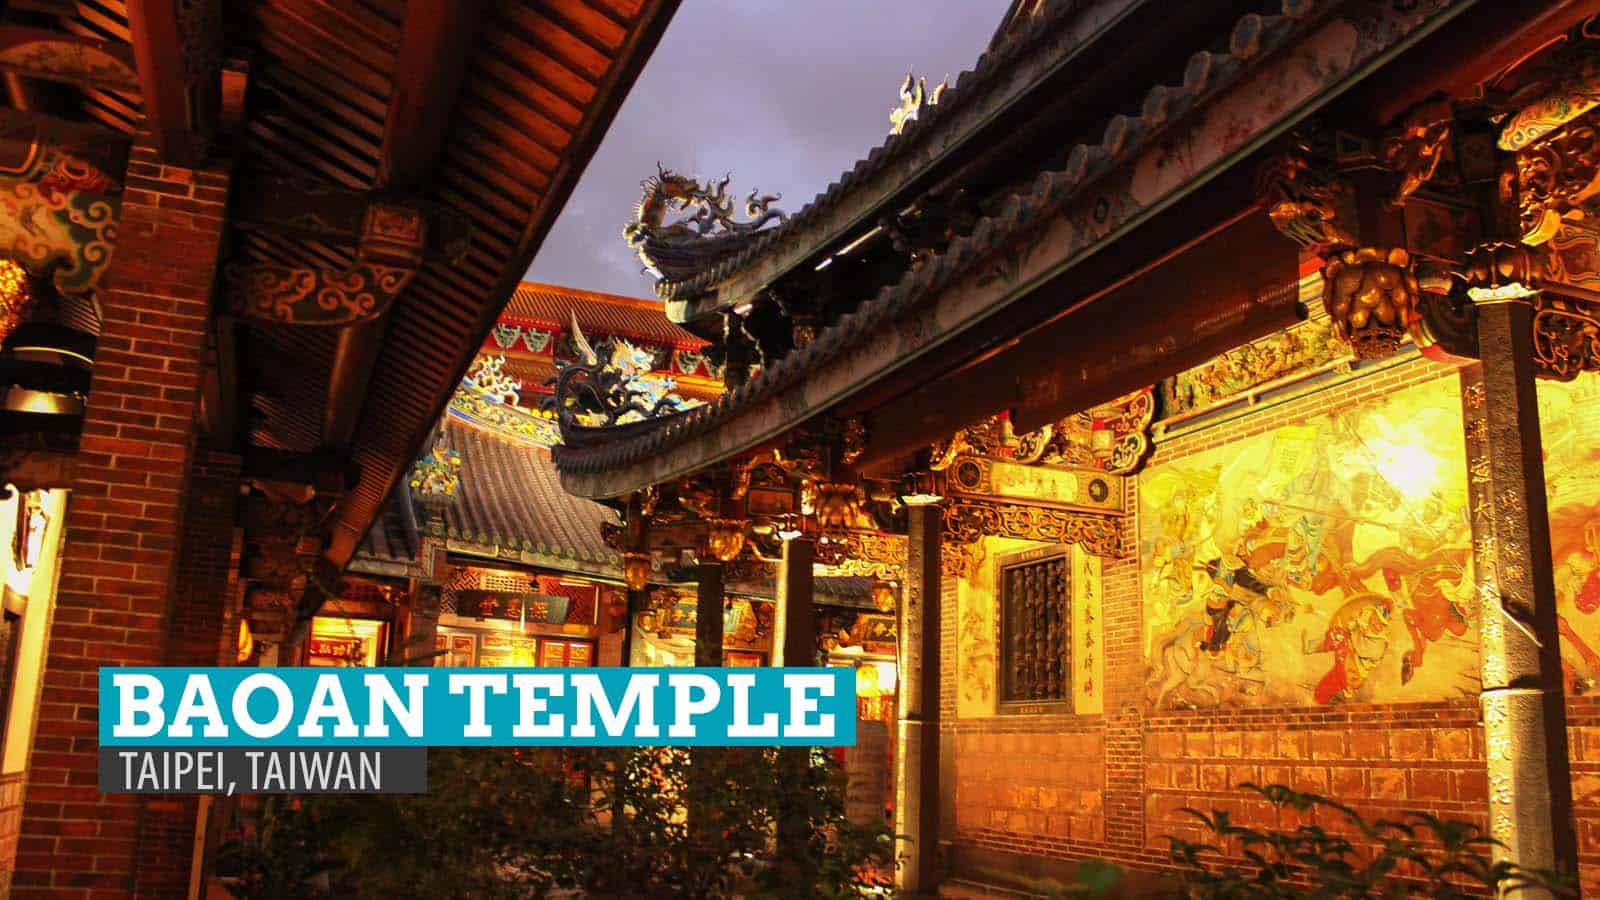 In Pictures: Dalongdong Baoan Temple at Night in Taipei, Taiwan